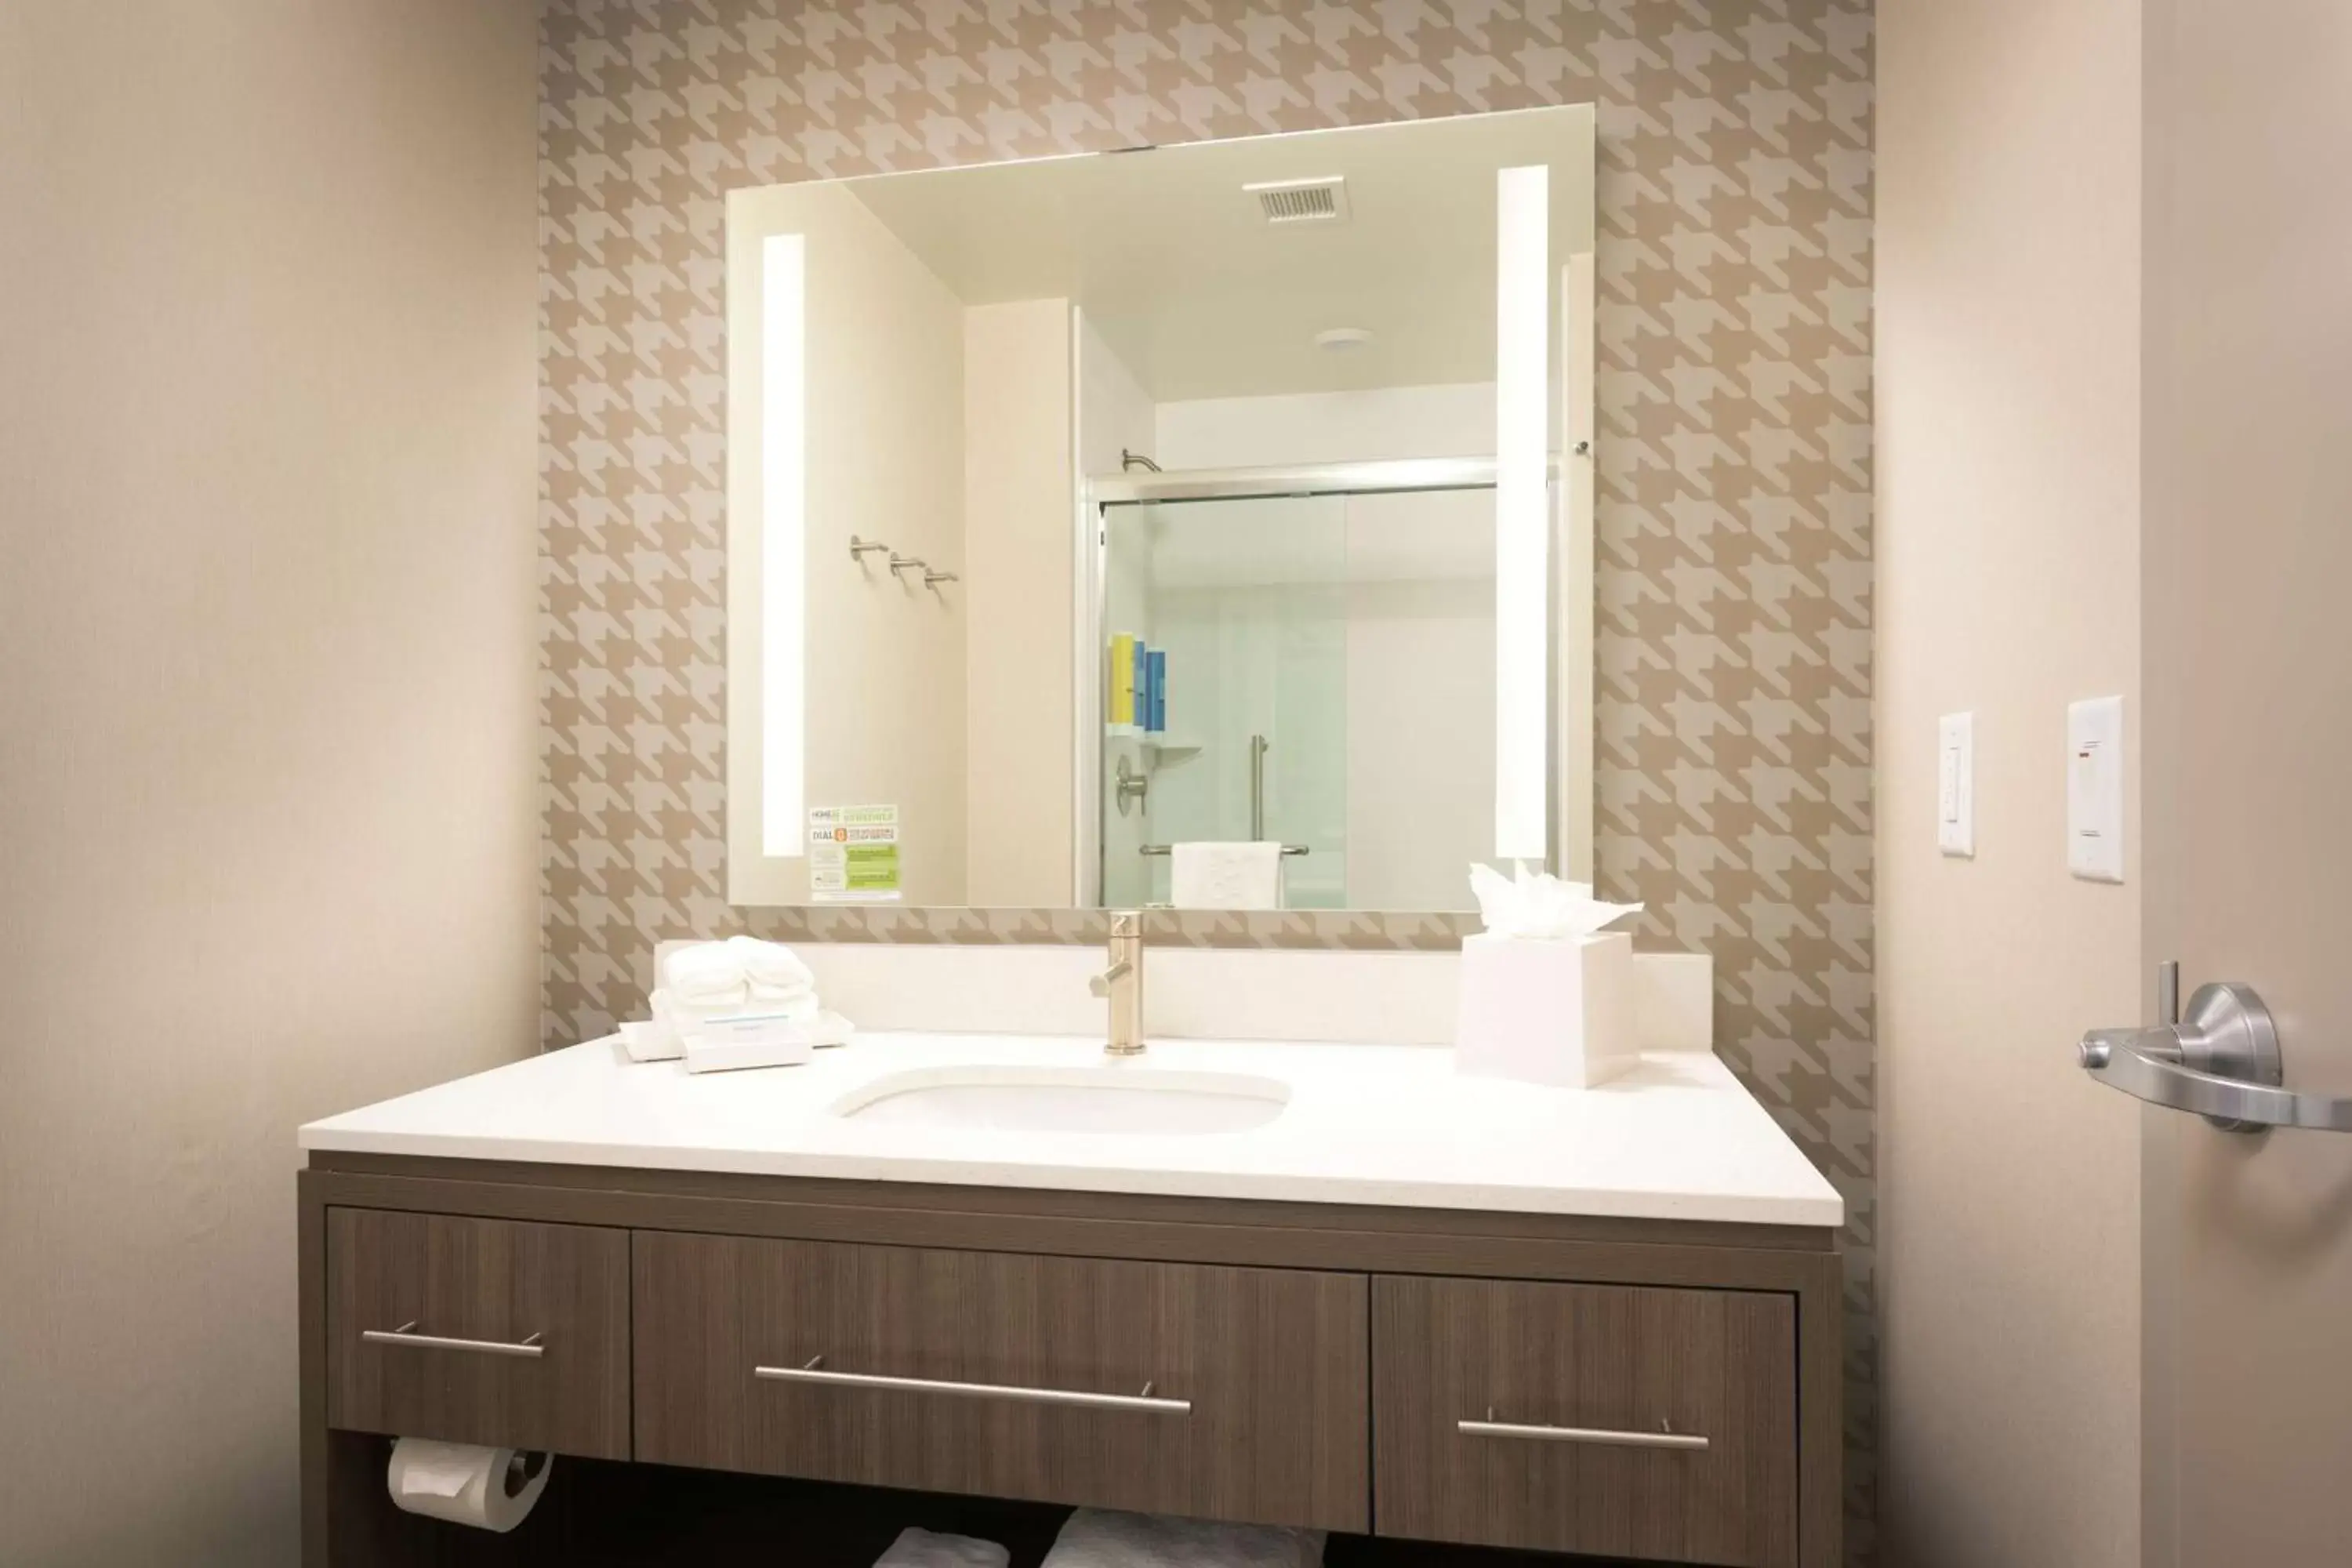 Bathroom in Home2 Suites By Hilton Atlanta Nw/Kennesaw, Ga